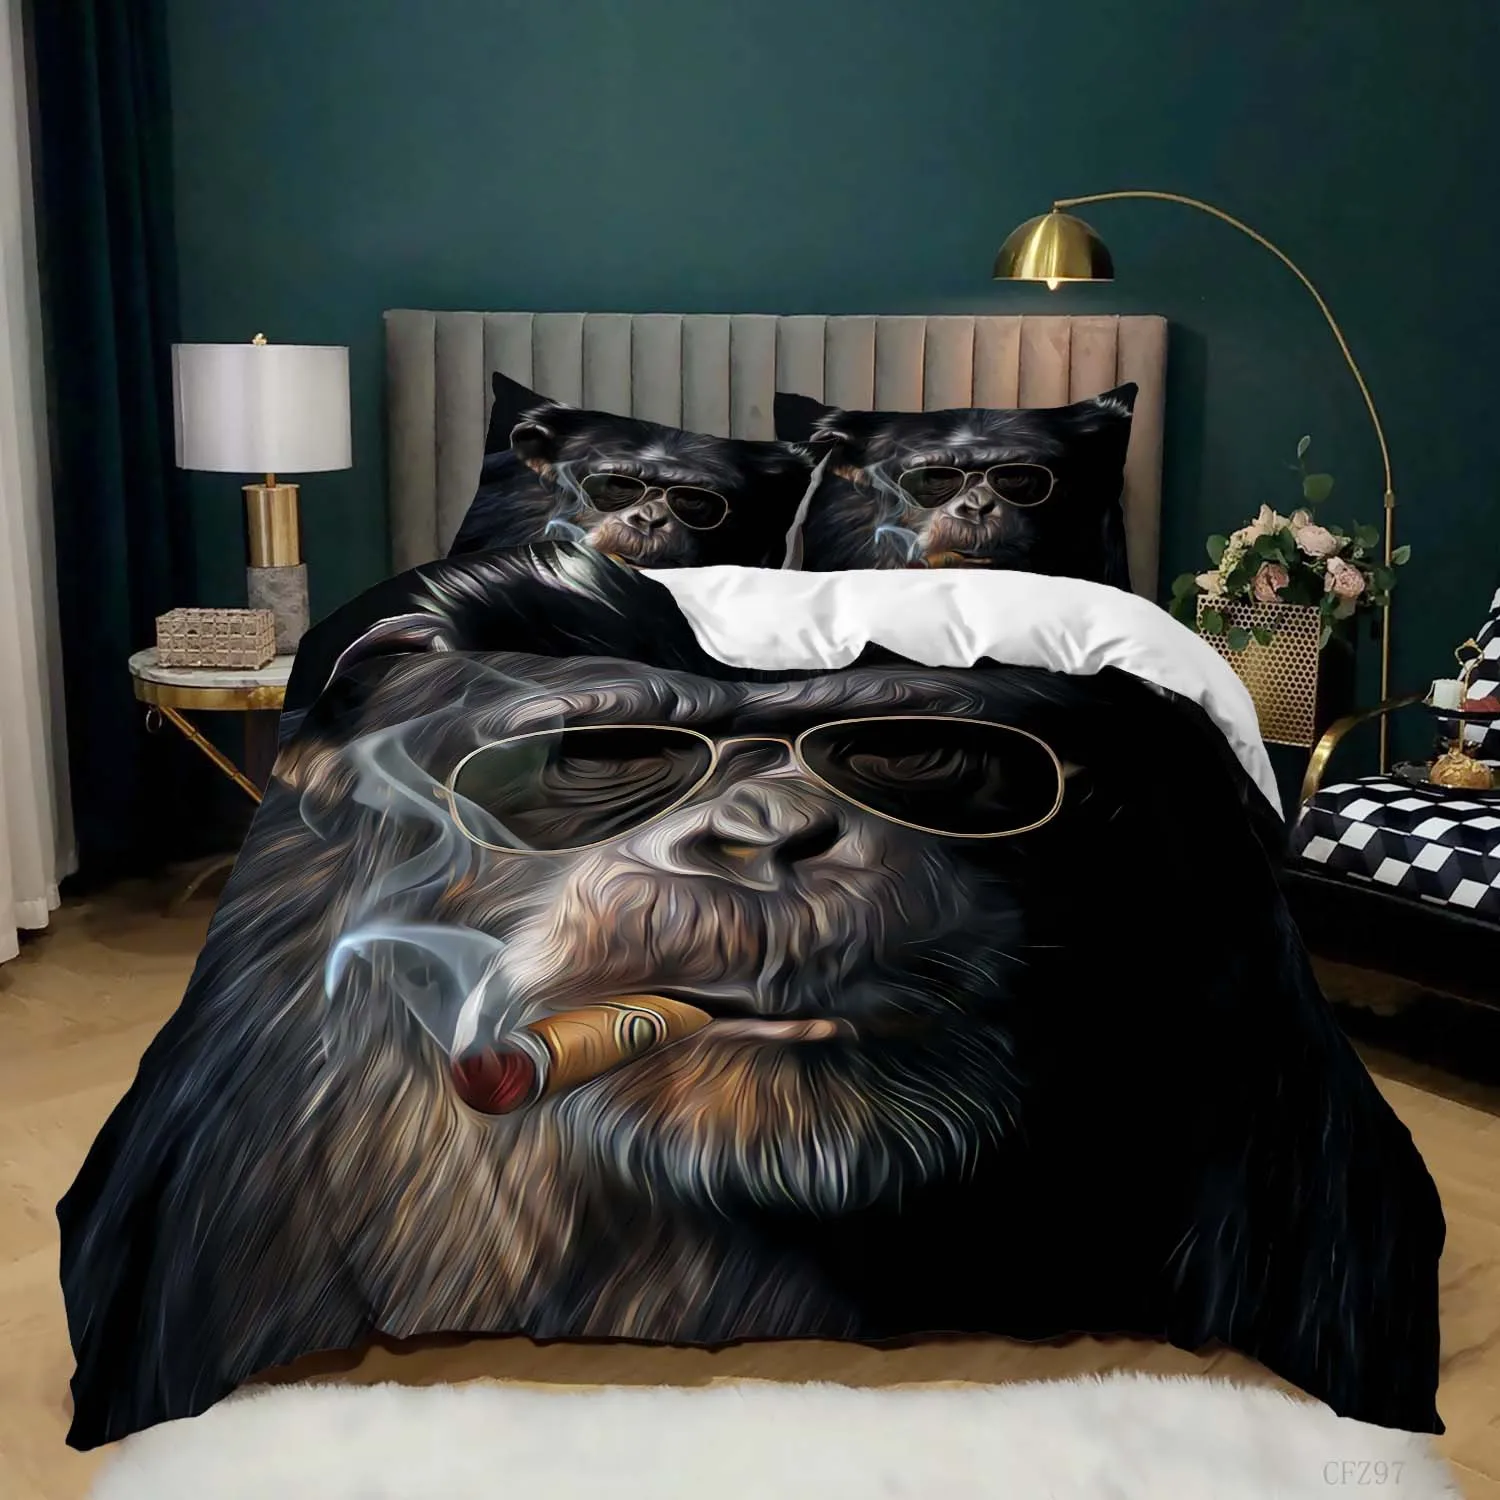 

3D Monkey Bedding Set For Bedroom Soft Comforter Duvet Cover Bedspreads For Bed Linen Comefortable Quilt And Pillowcase